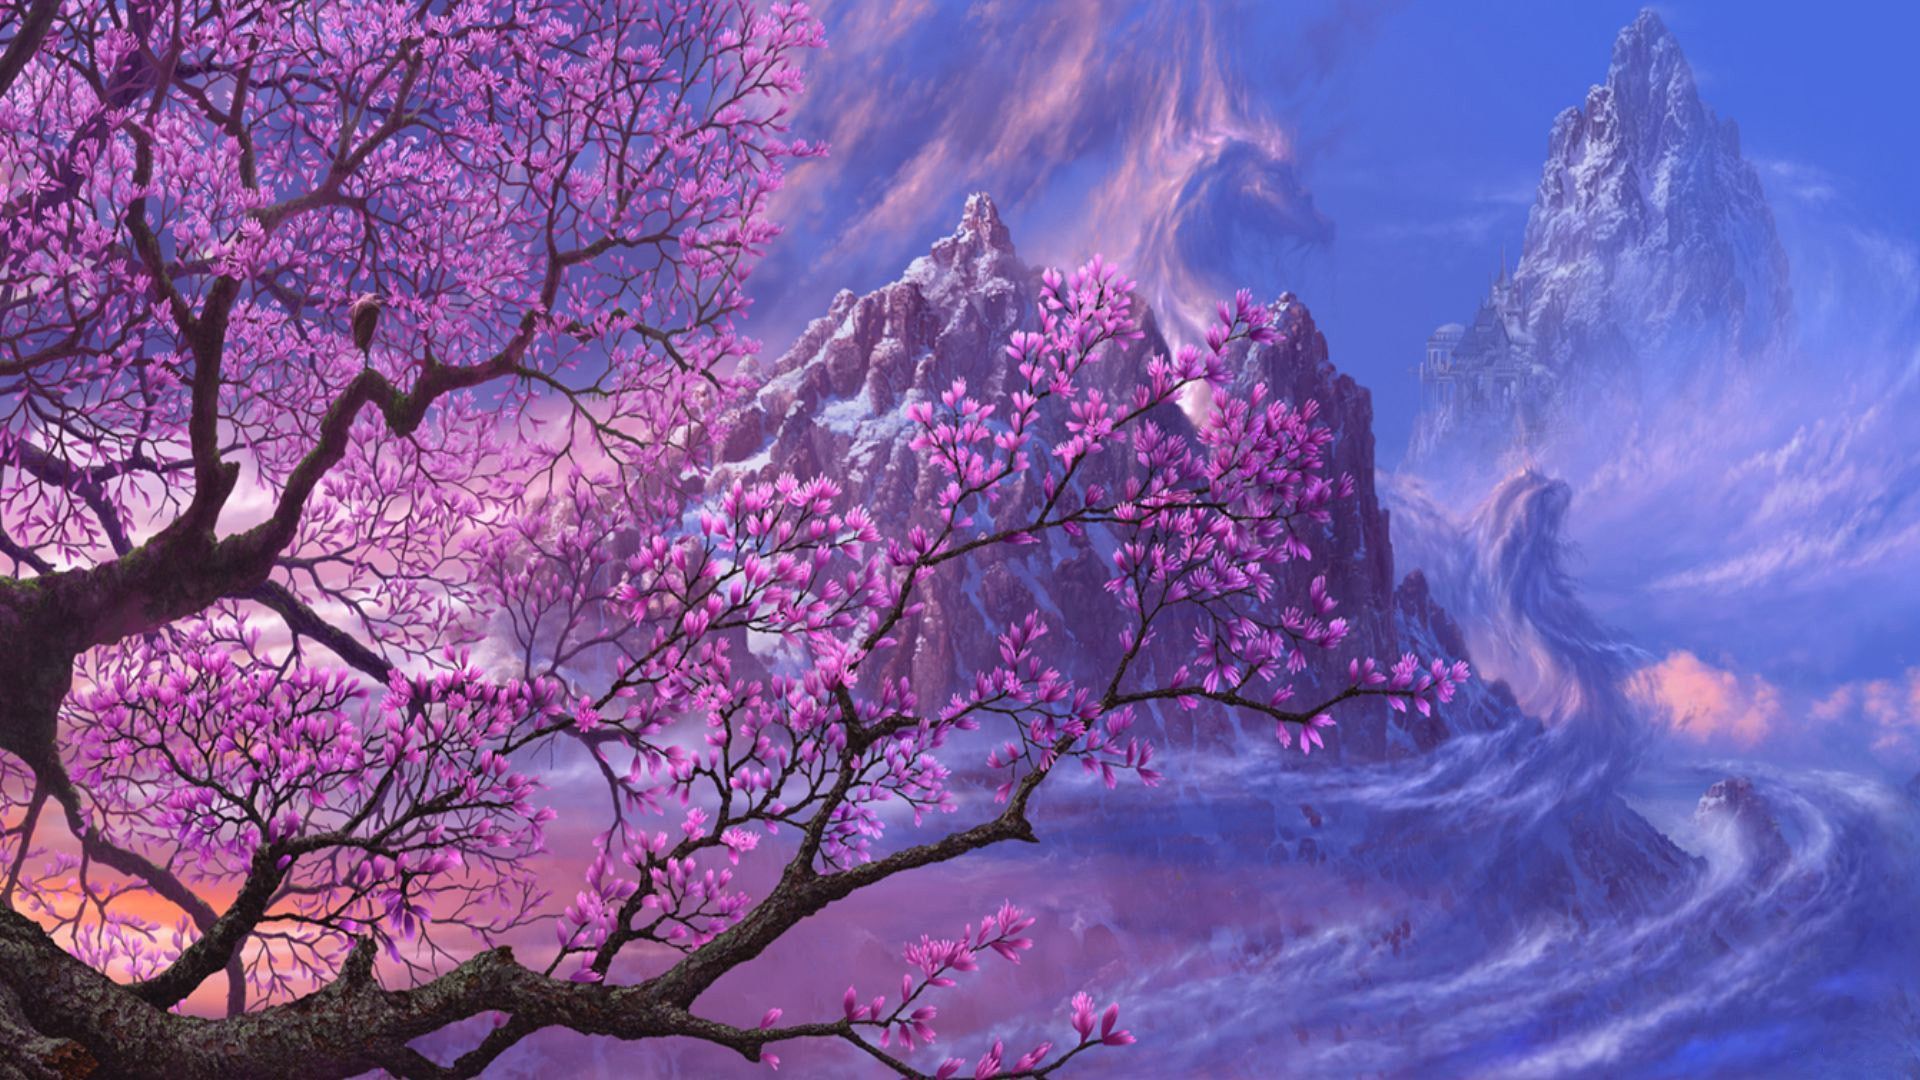 Anime Artwork Asia Dragons Fantasy Art Purple Trees. Landscape